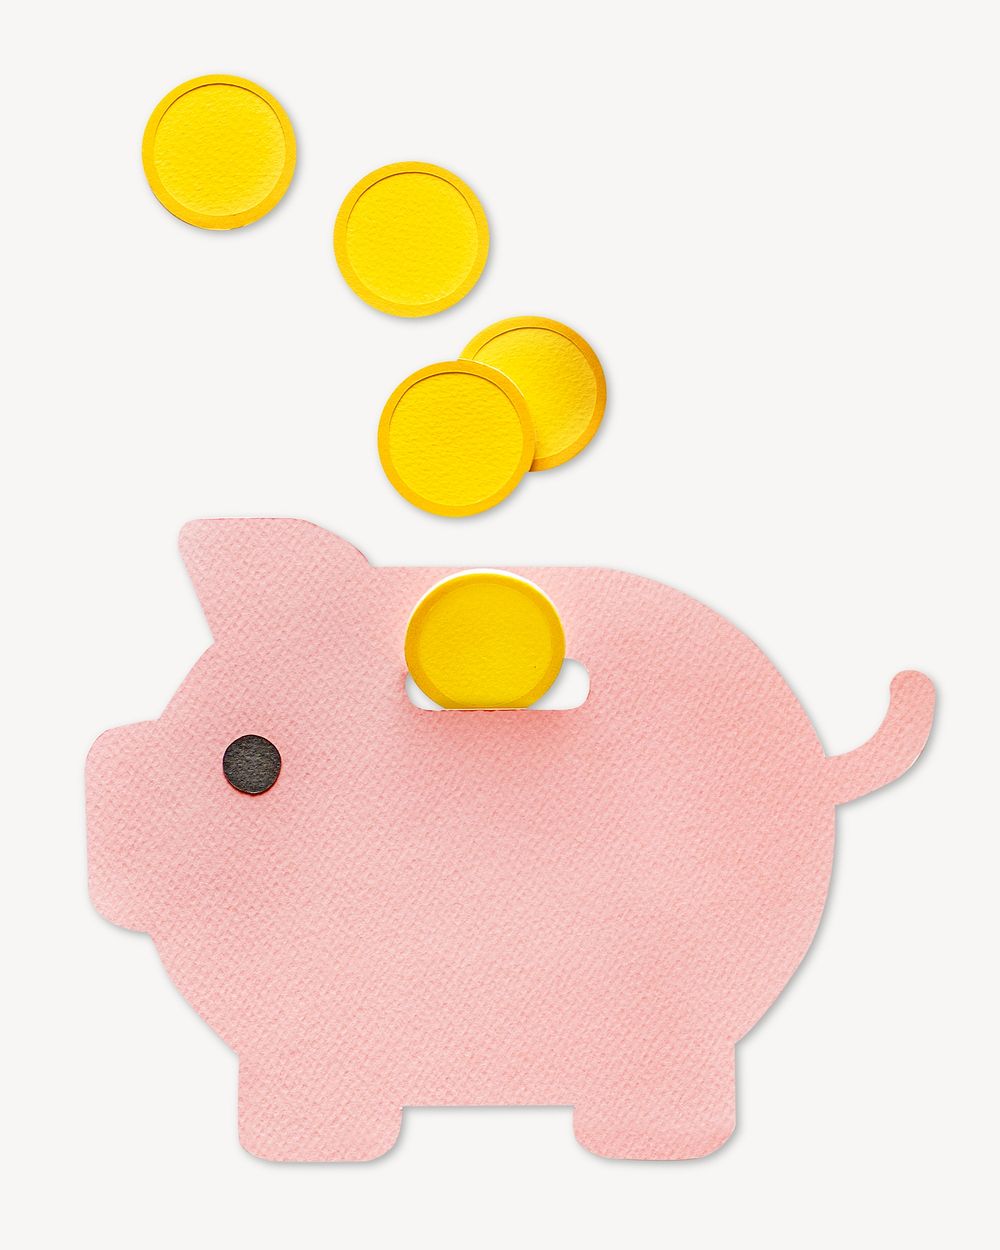 Piggy bank isolated image